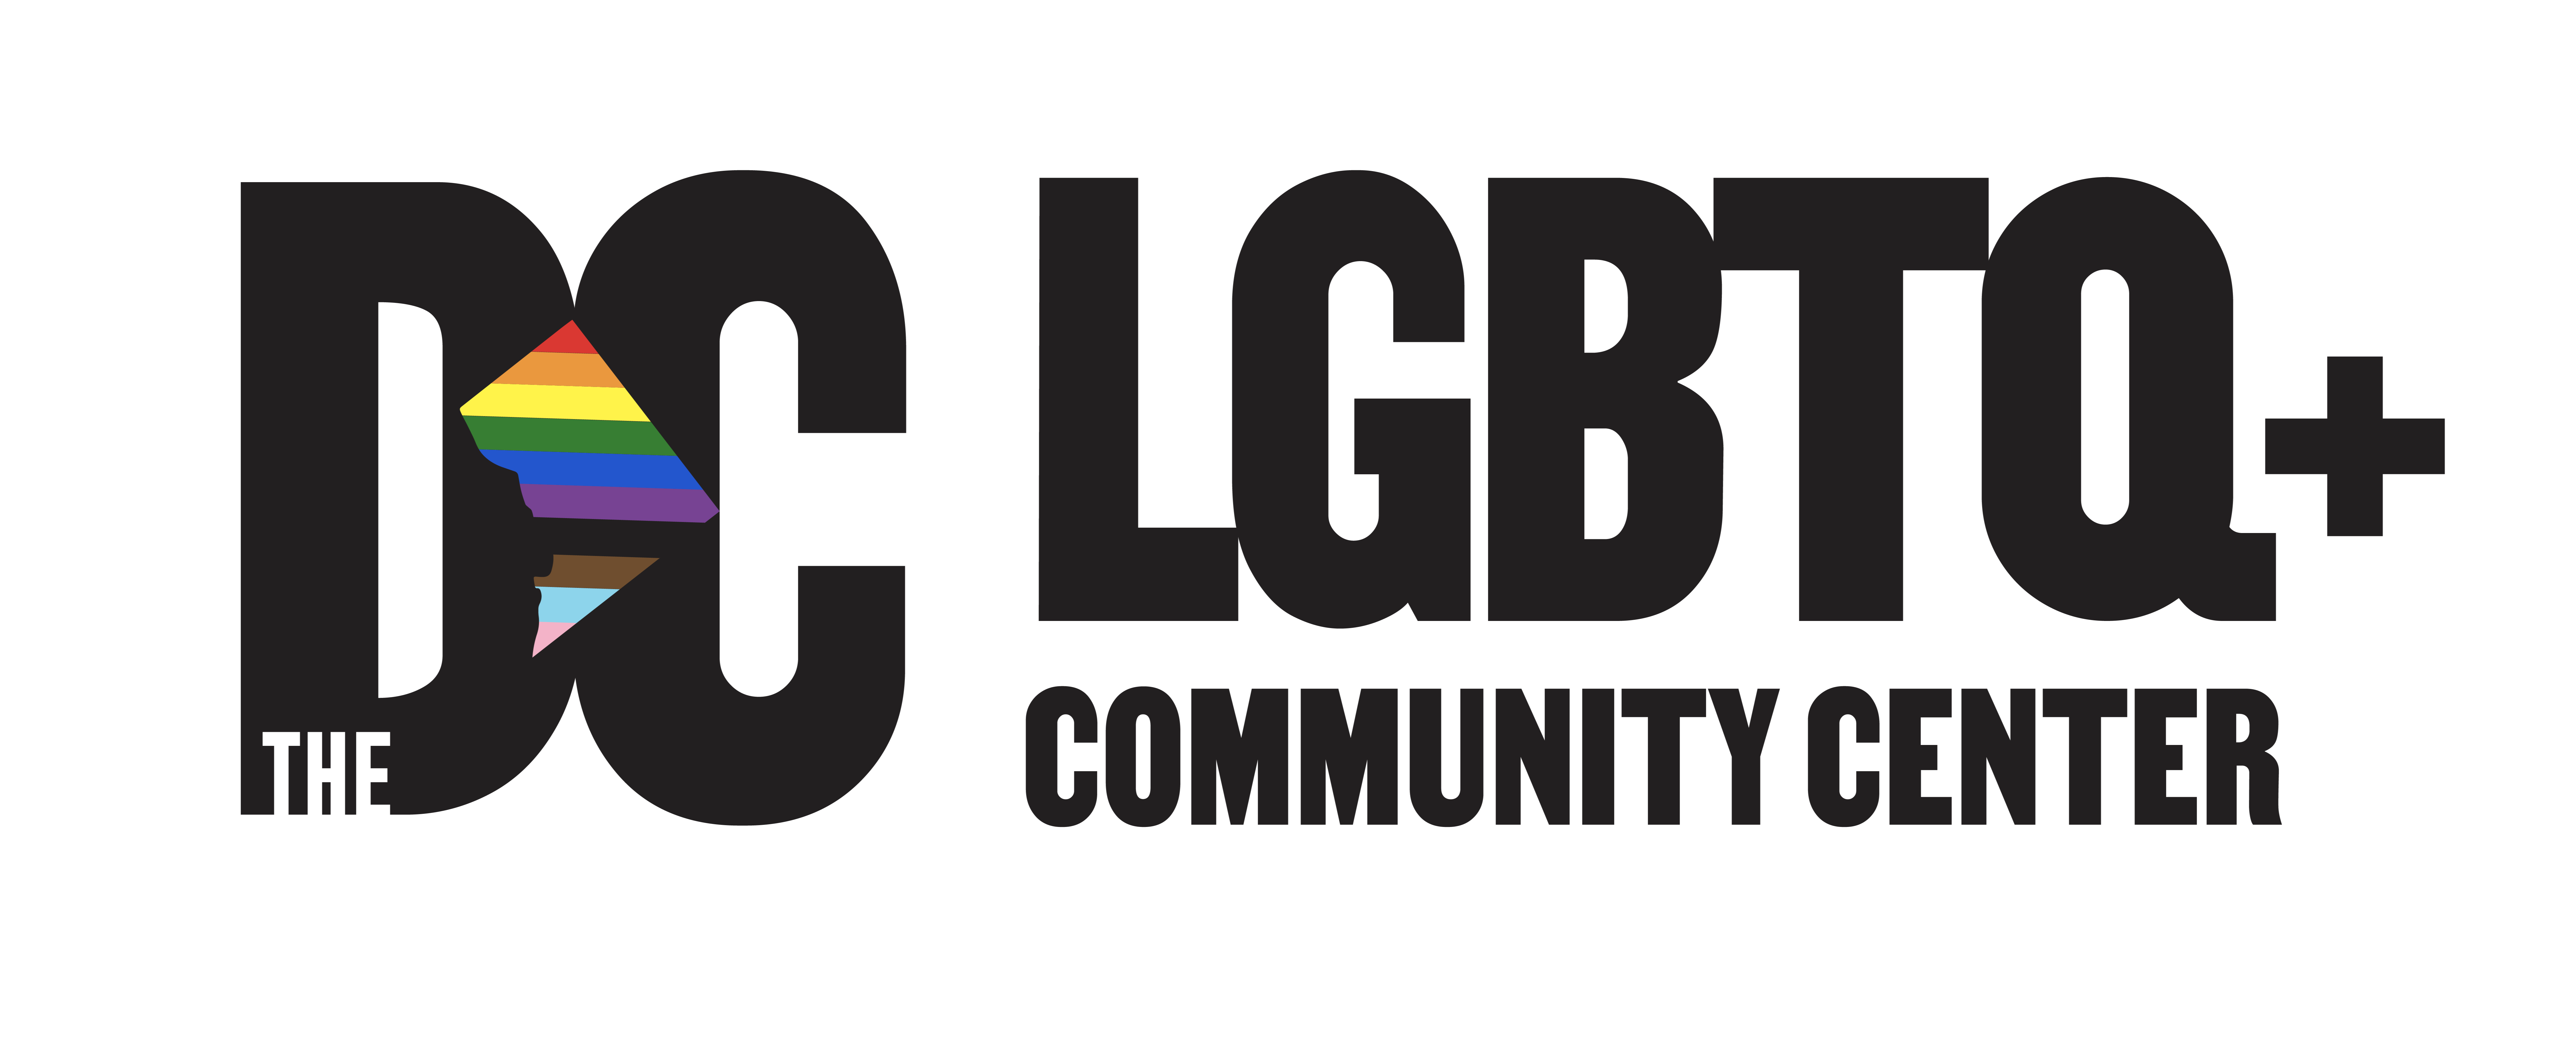 The DC LGBTQ+ Community Center logo